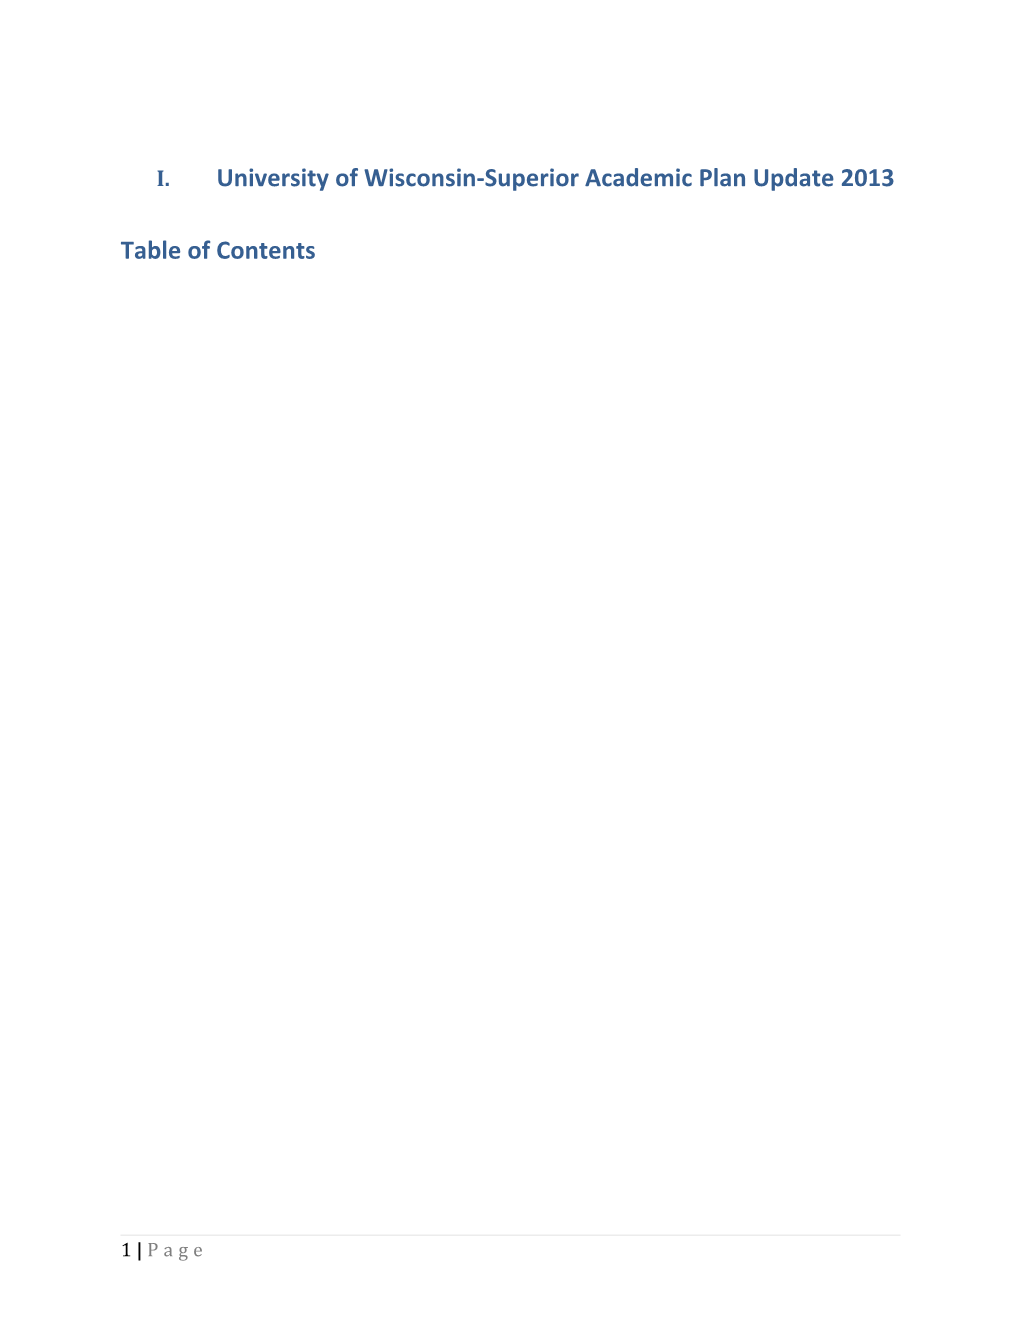 University of Wisconsin-Superior Academic Plan Update 2013